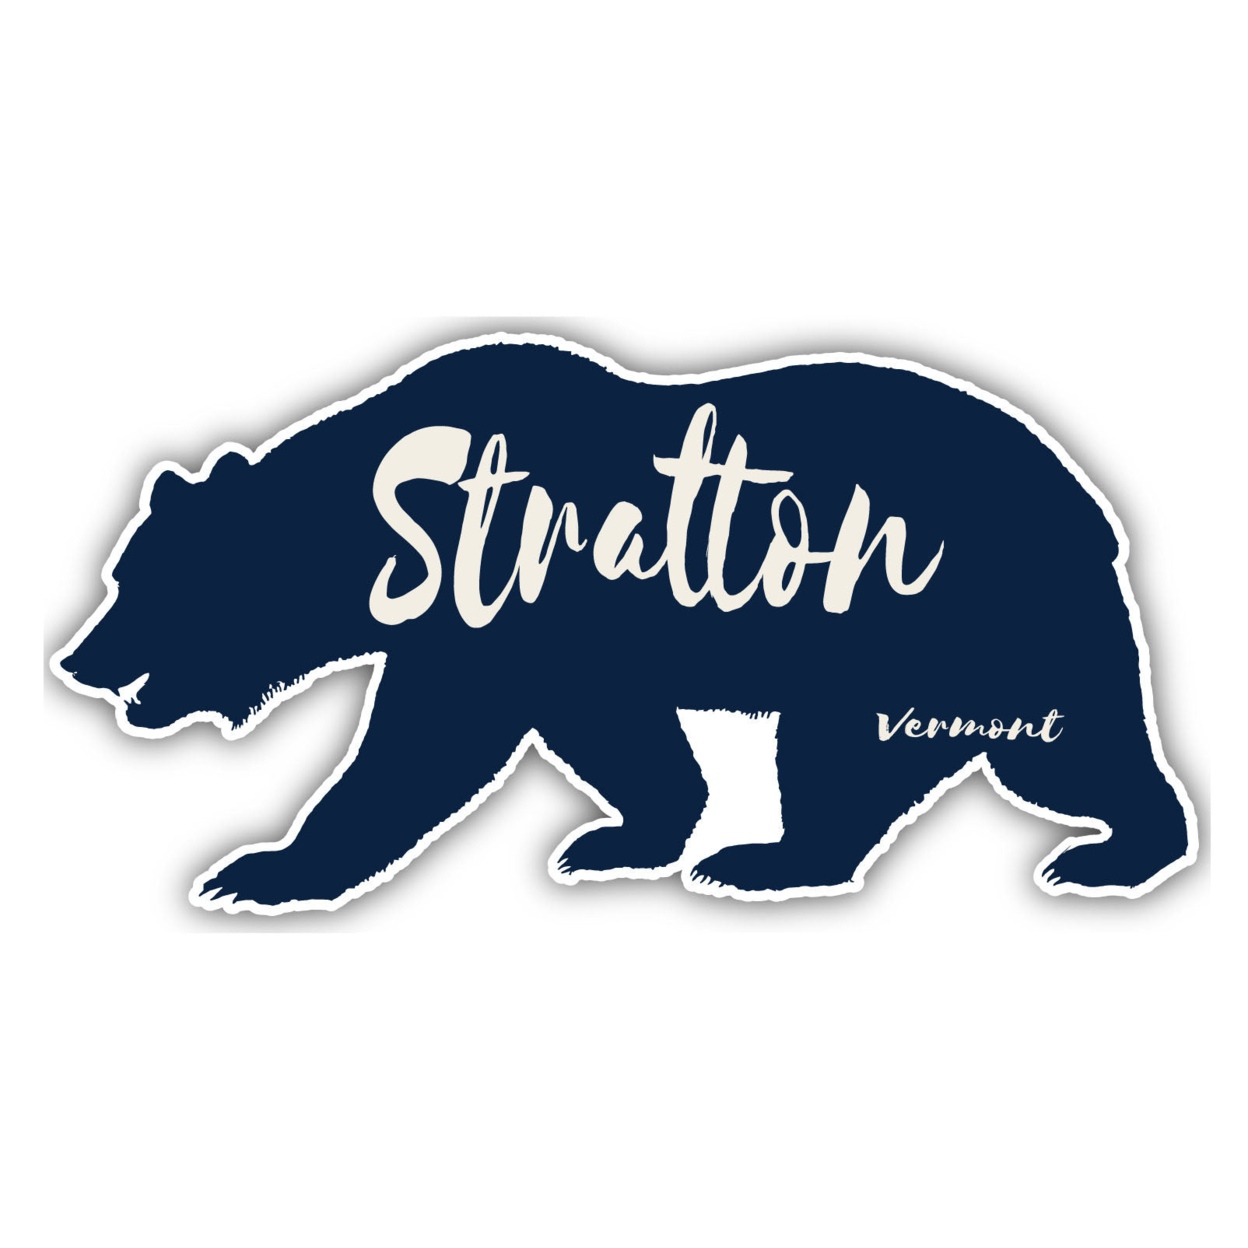 Stratton Vermont Souvenir Decorative Stickers (Choose Theme And Size) - Single Unit, 2-Inch, Bear